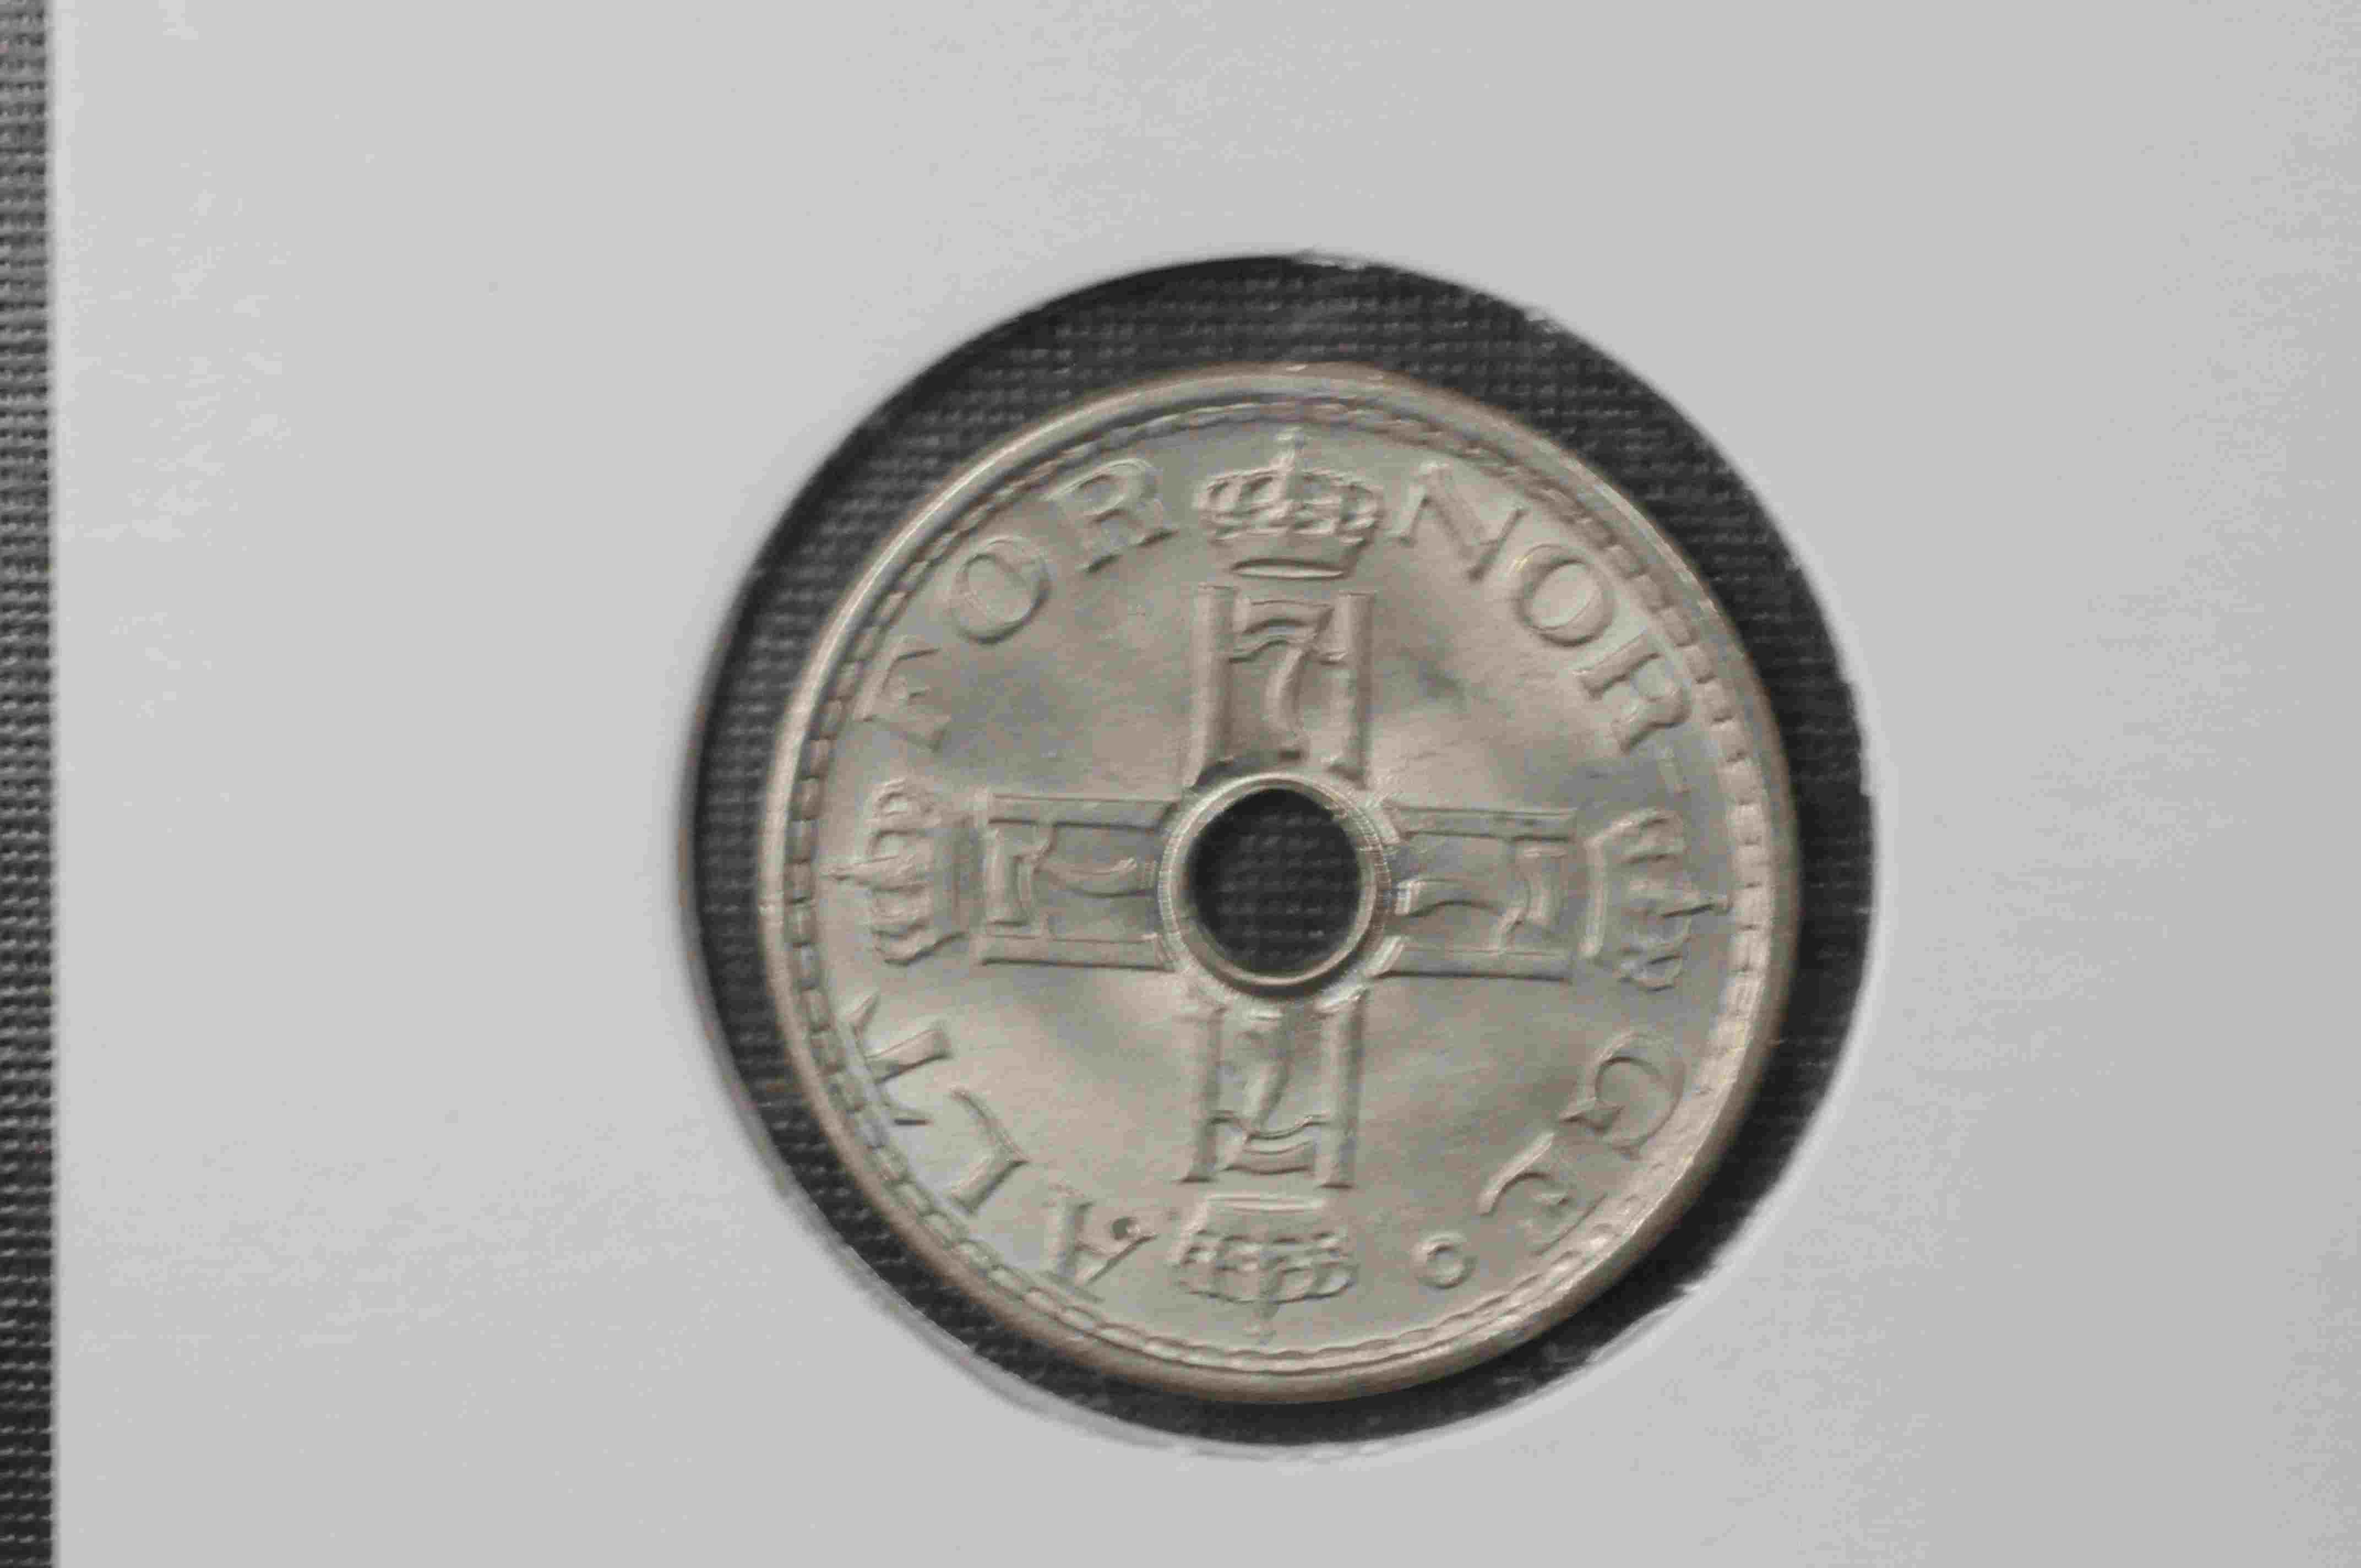 50ø 1948 kv0